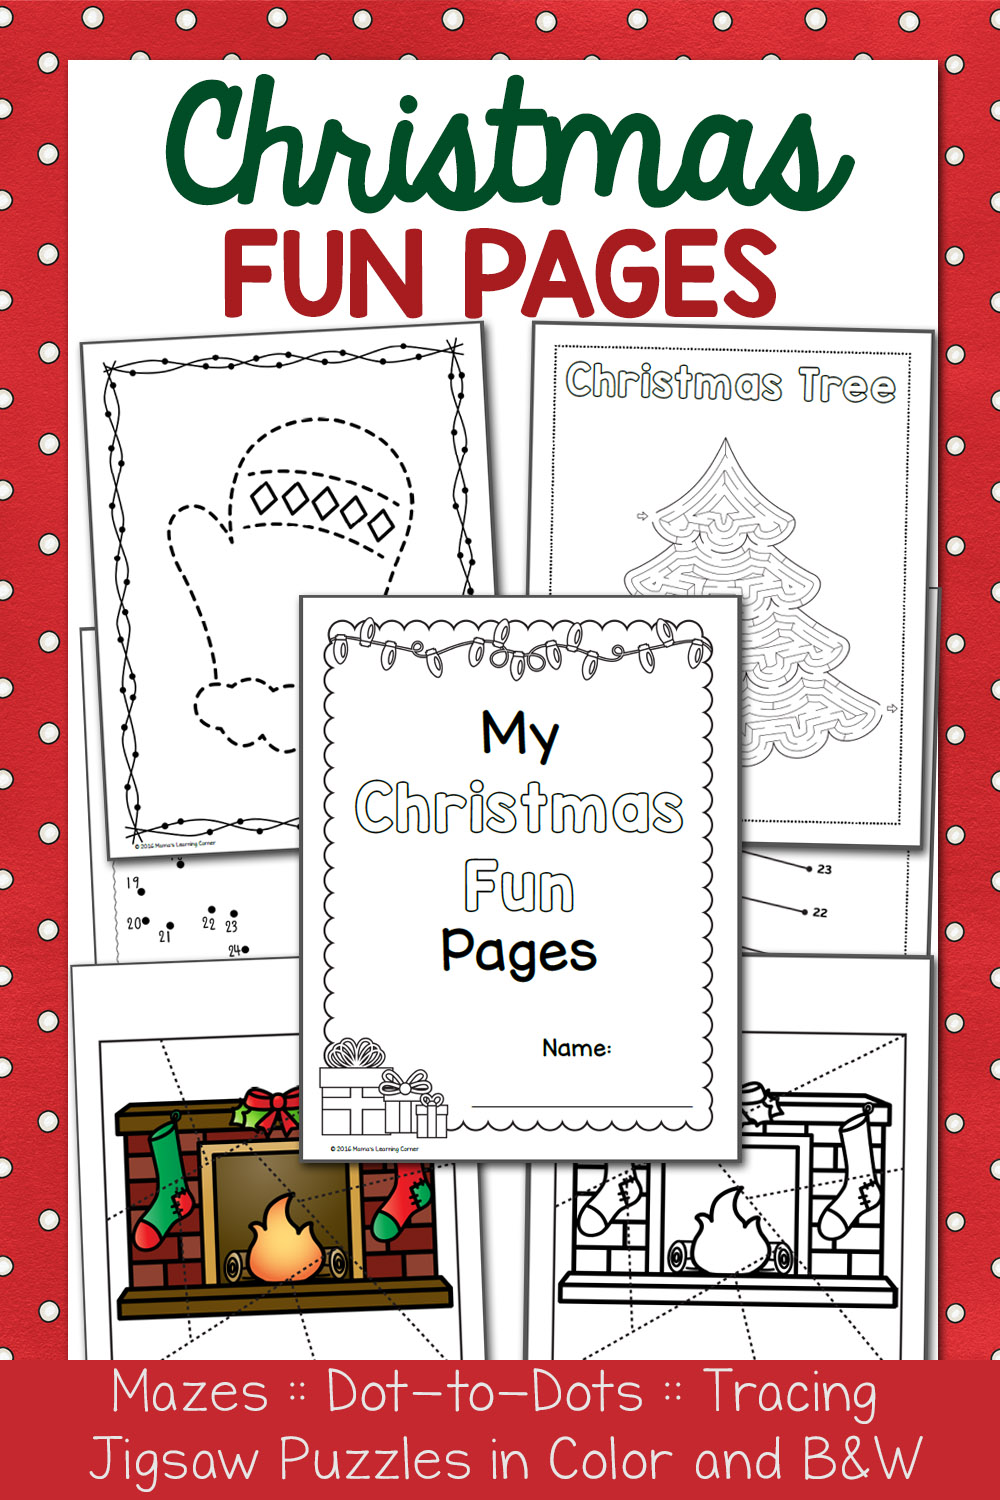 Christmas Fun Pages Packet DottoDots, Mazes, Tracing! Mamas